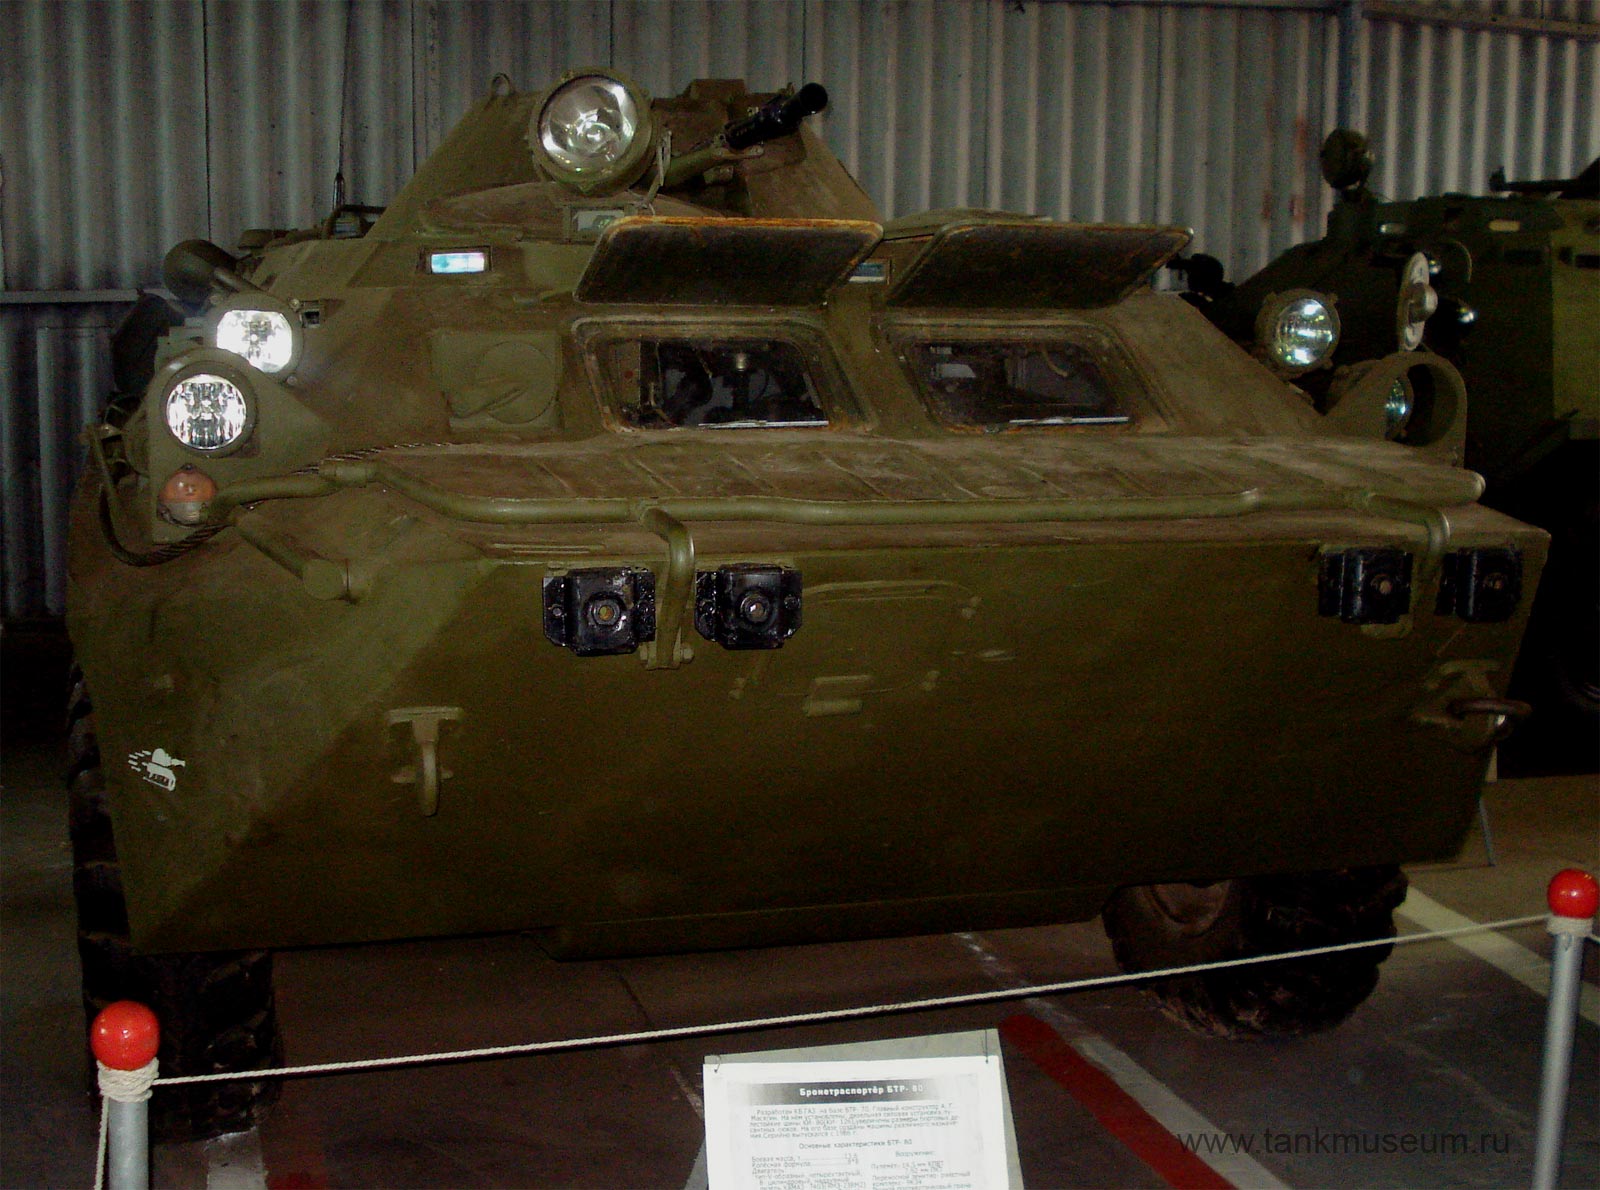 Kubinka tank museum Armored personnel carrier BTR-80